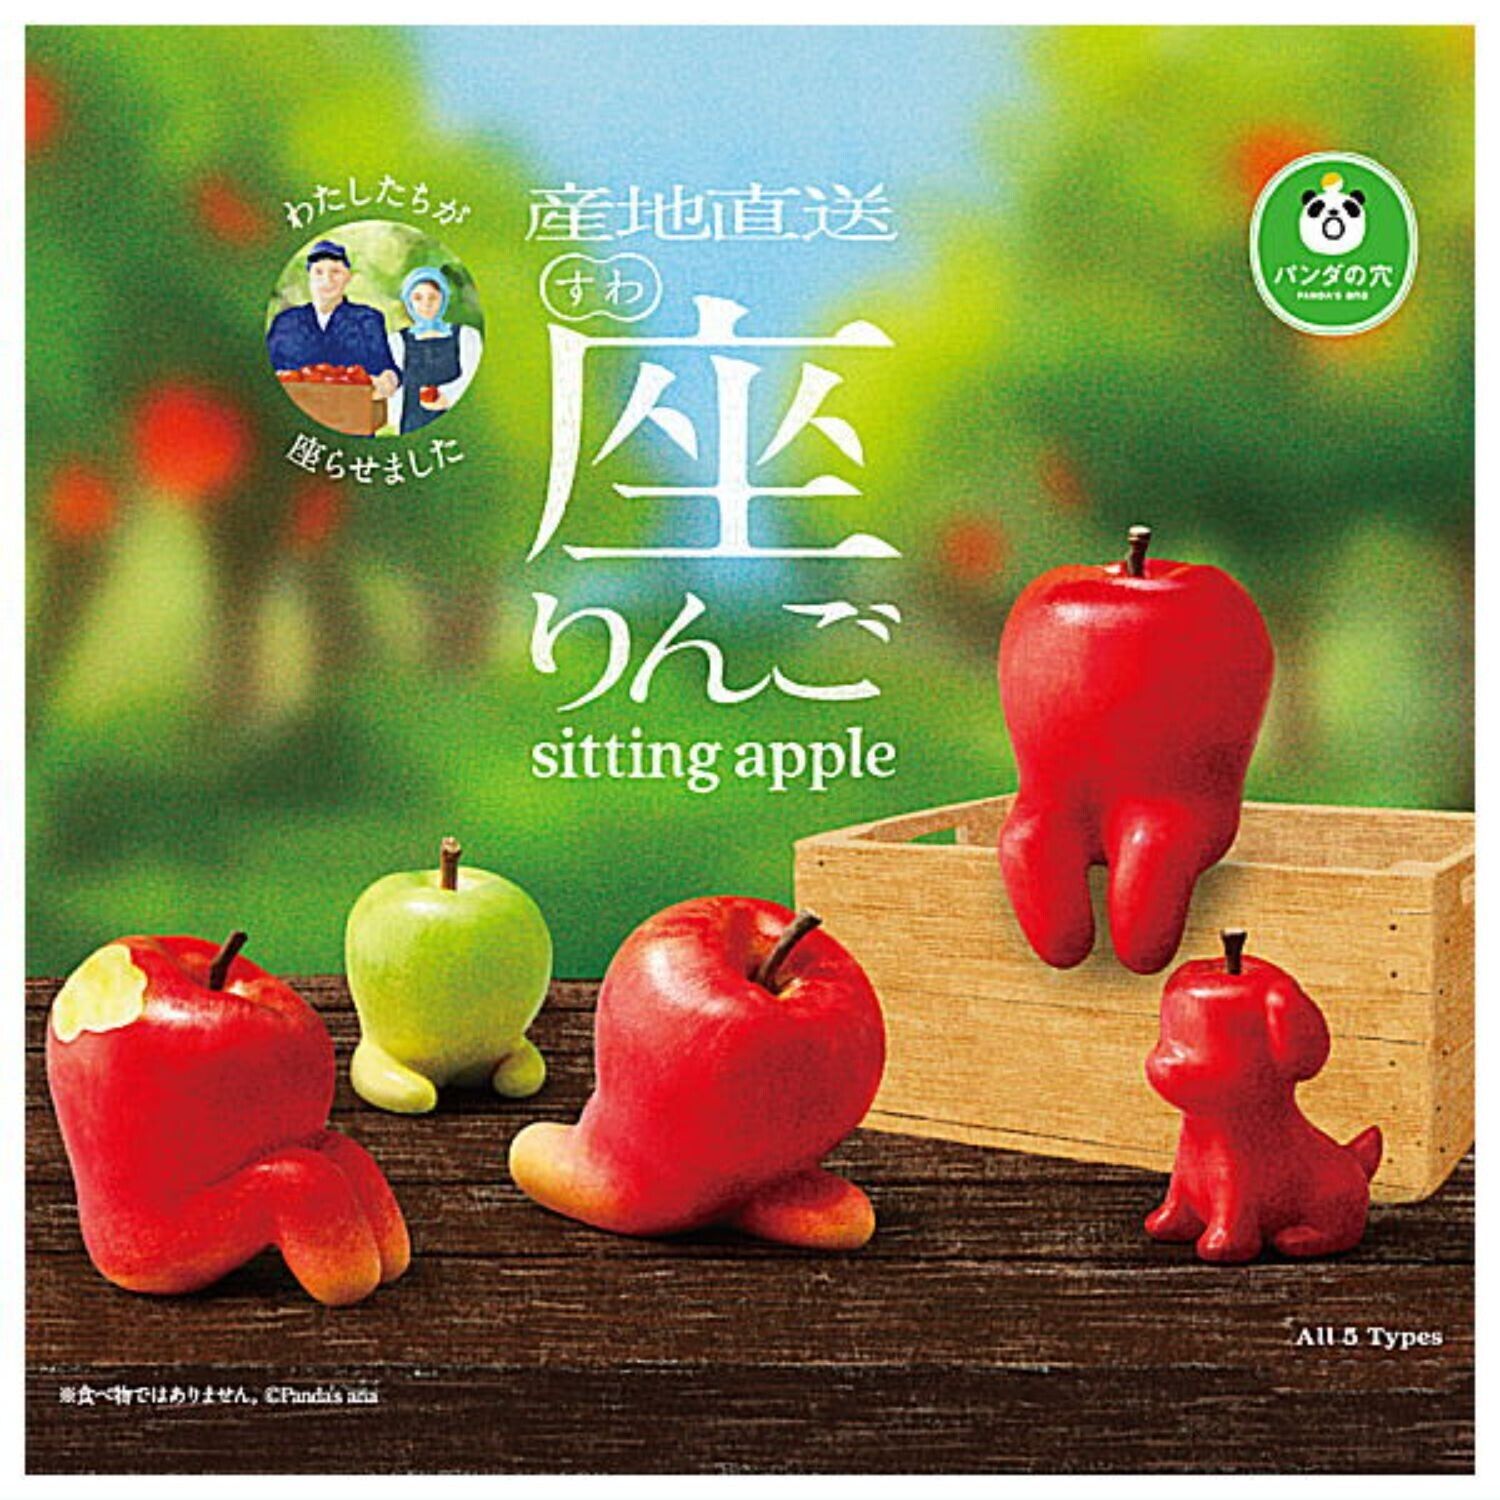 Panda's ana Suwaringo Mascot Capsule Toy 5 Types Full Comp Set Gacha New Japan